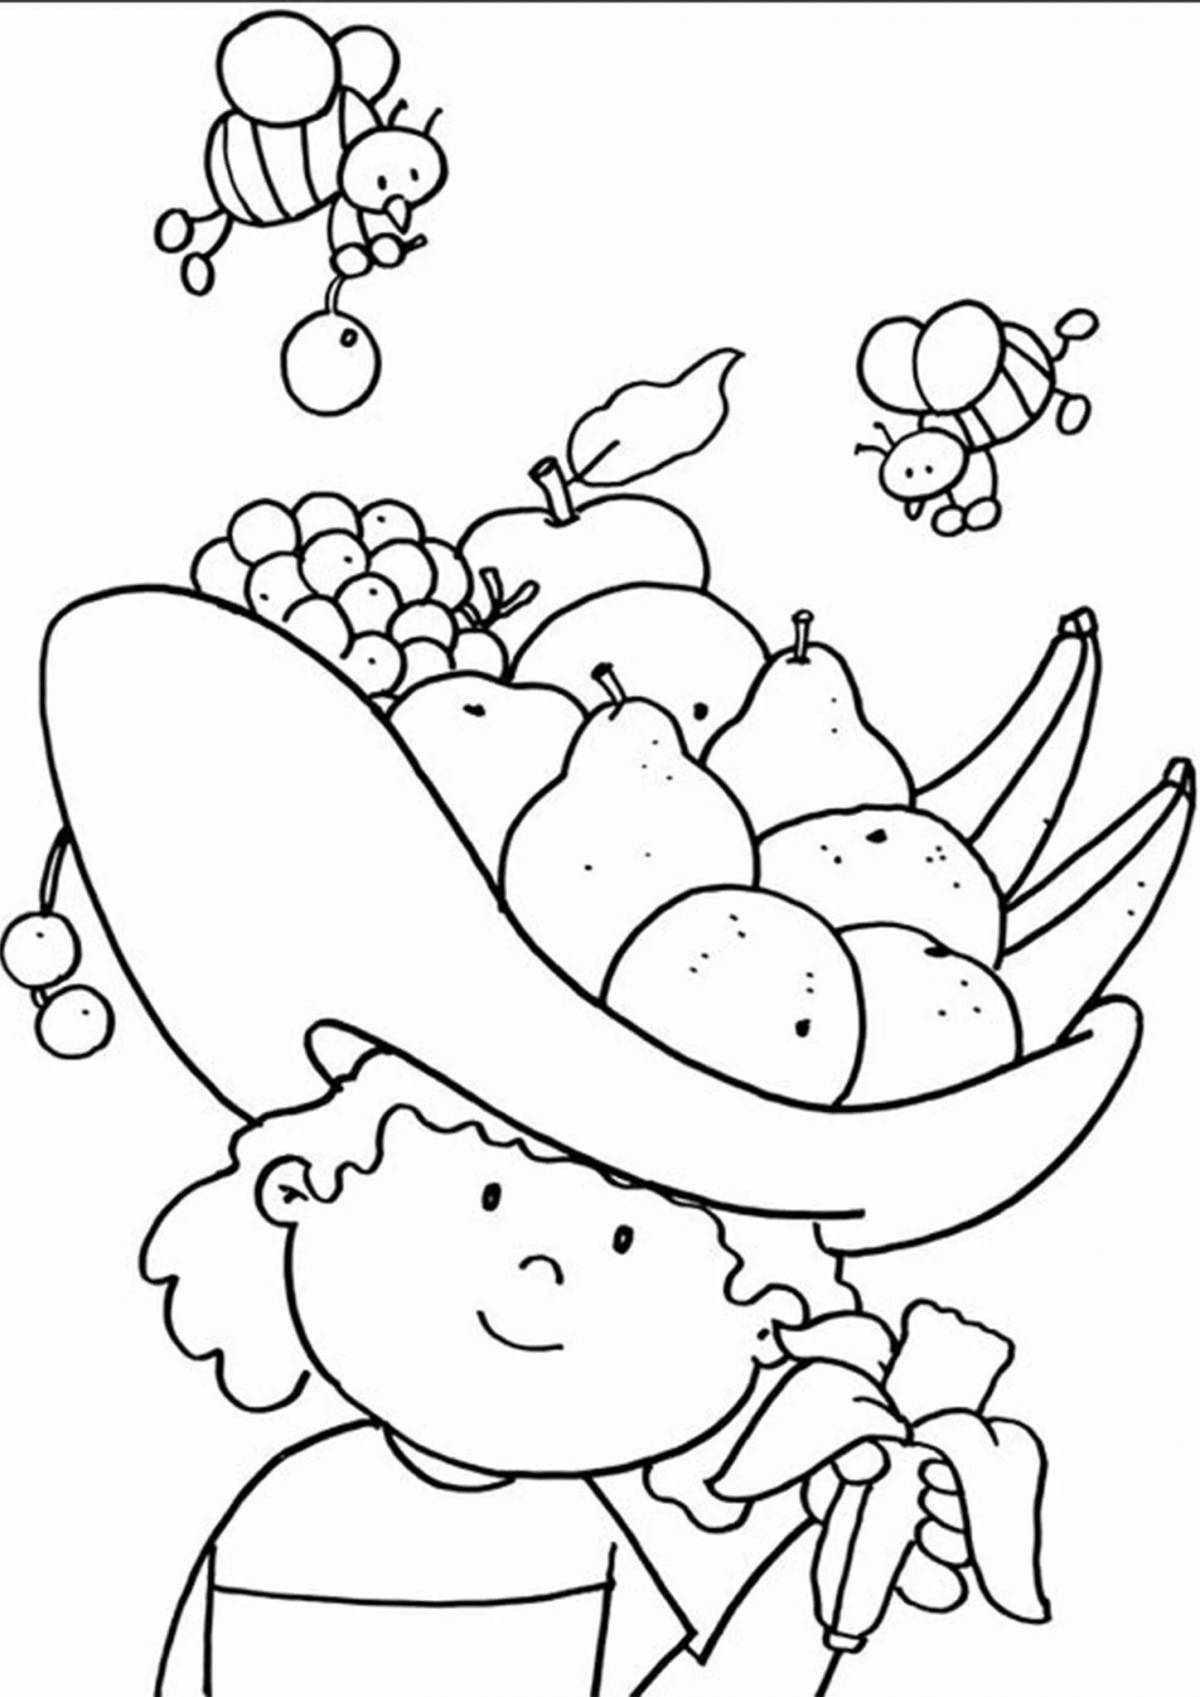 Appetizing food coloring for preschoolers